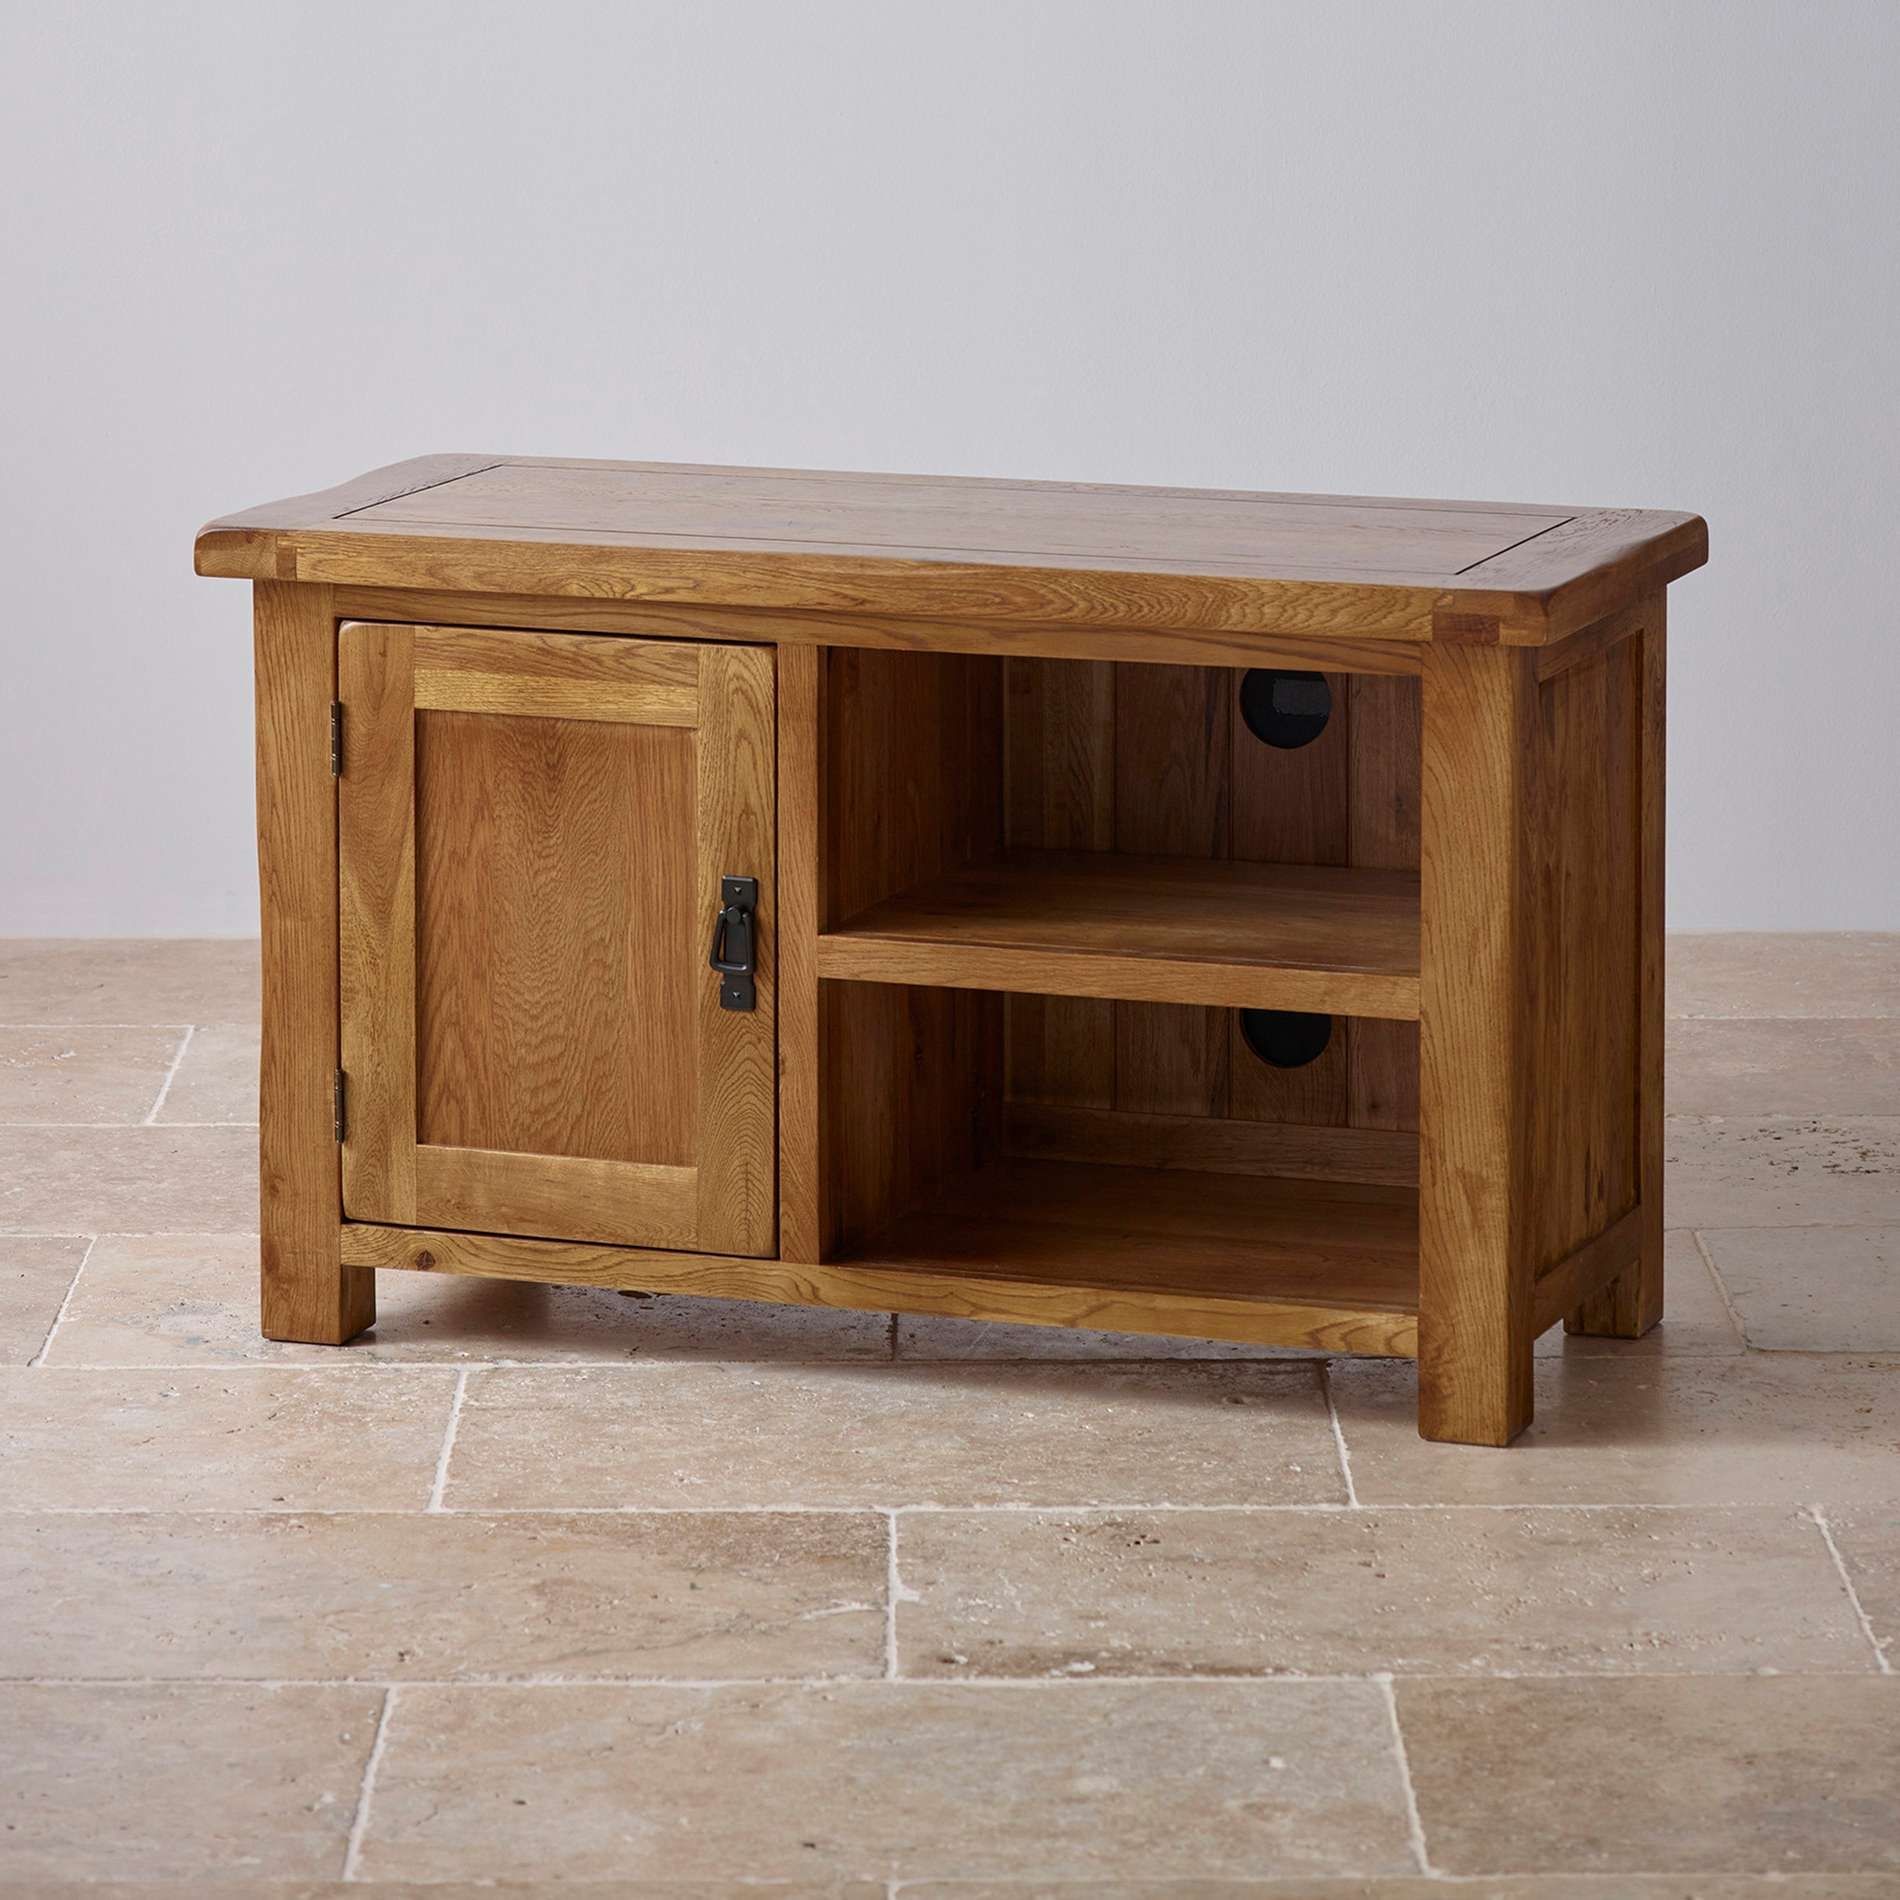 Original Rustic Tv Cabinet In Solid Oak | Oak Furniture Land With Regard To Oak Tv Cabinets (View 2 of 20)